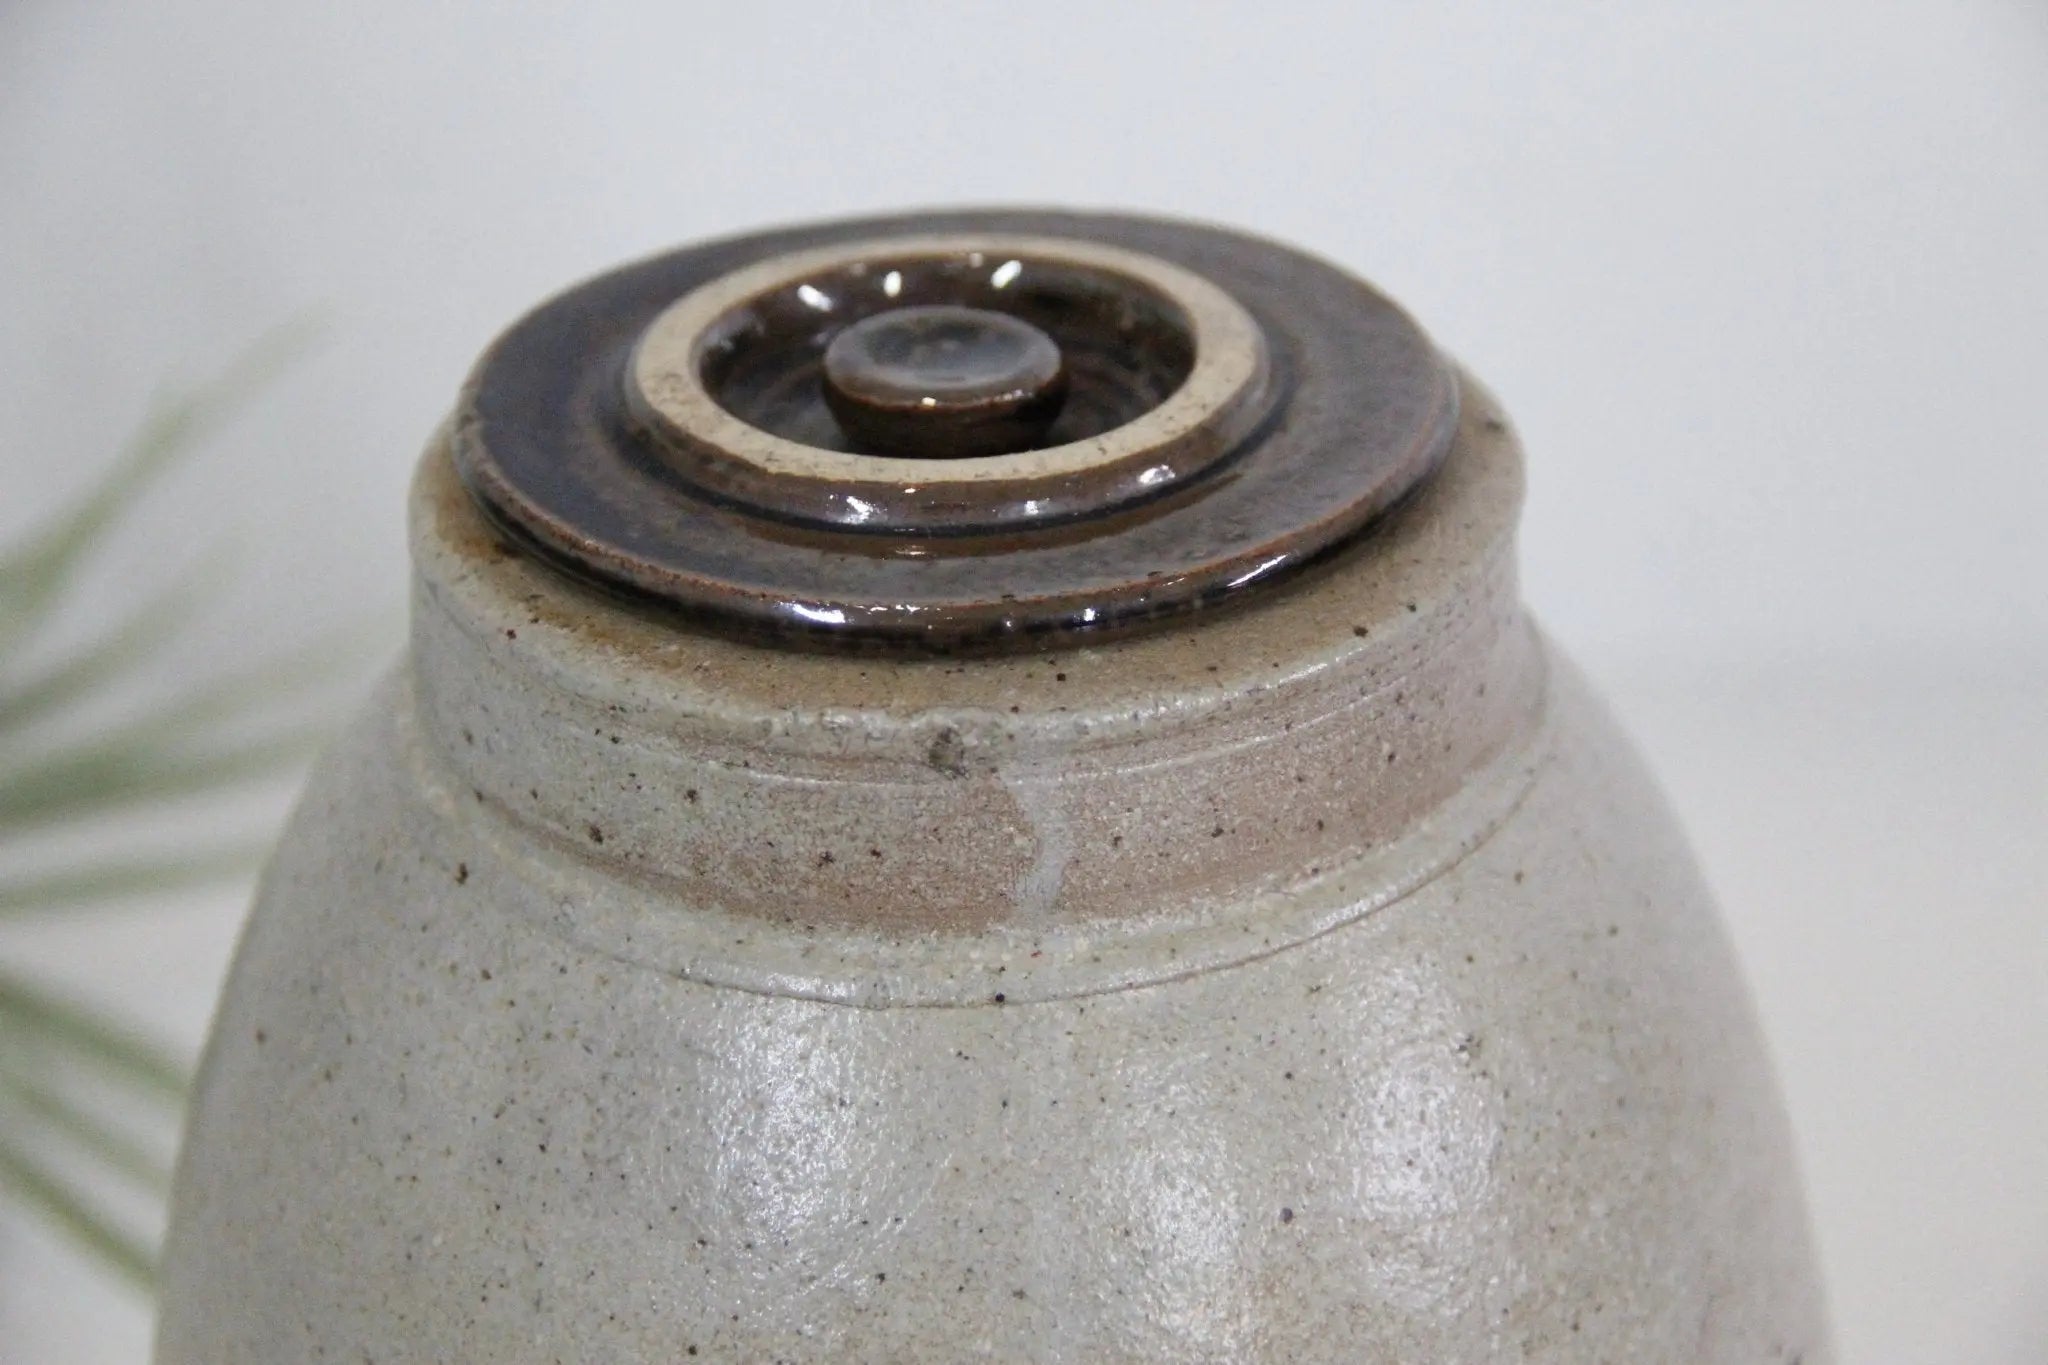 Primitive Salt Glazed Stoneware Crock | Canning Jar  Debra Hall Lifestyle